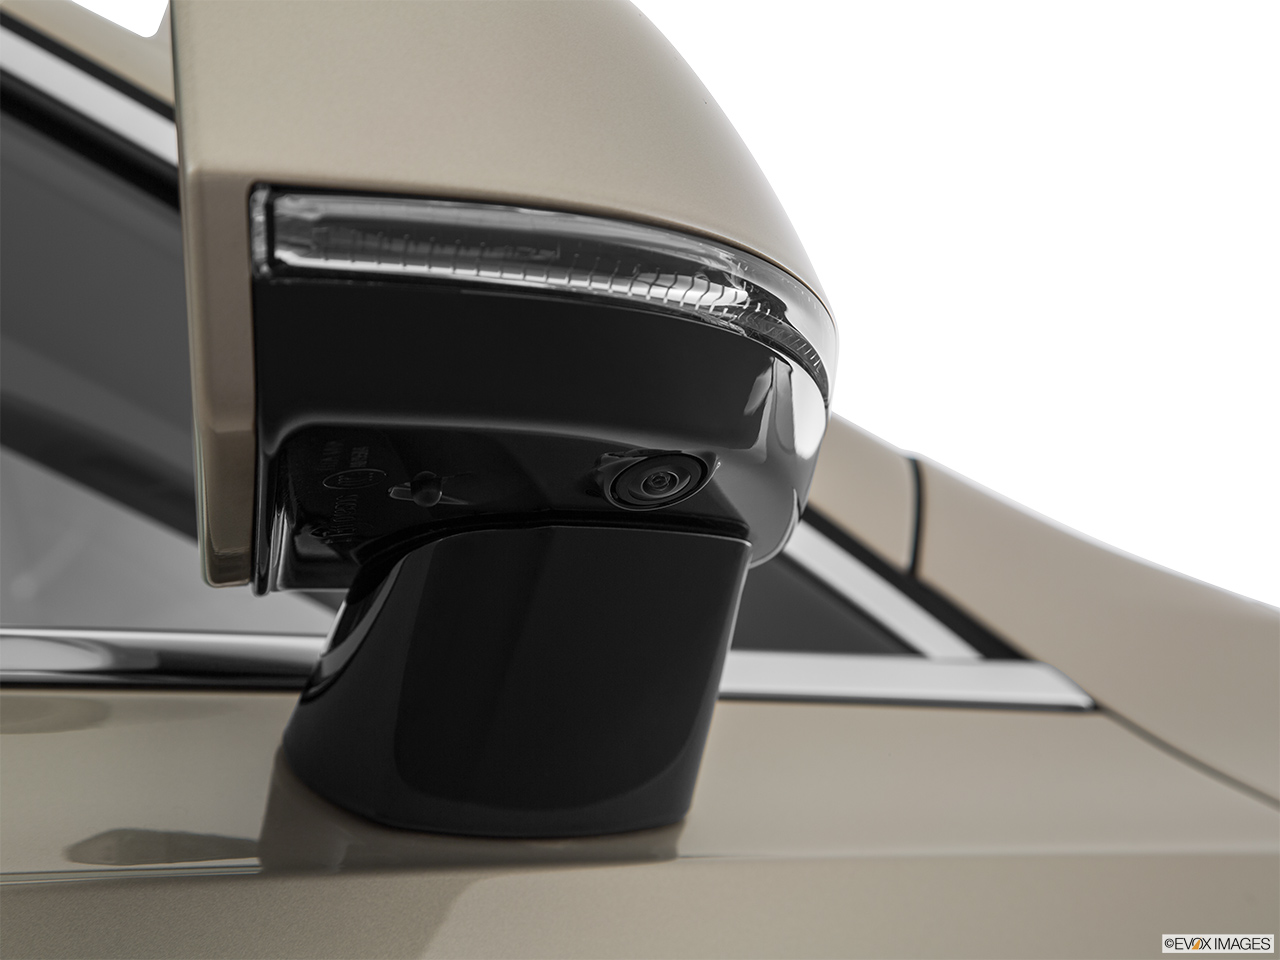 2018 Volvo S90 T8 Inscription eAWD Plug-in Hybrid Exterior Bonus Shots (no set spec) 